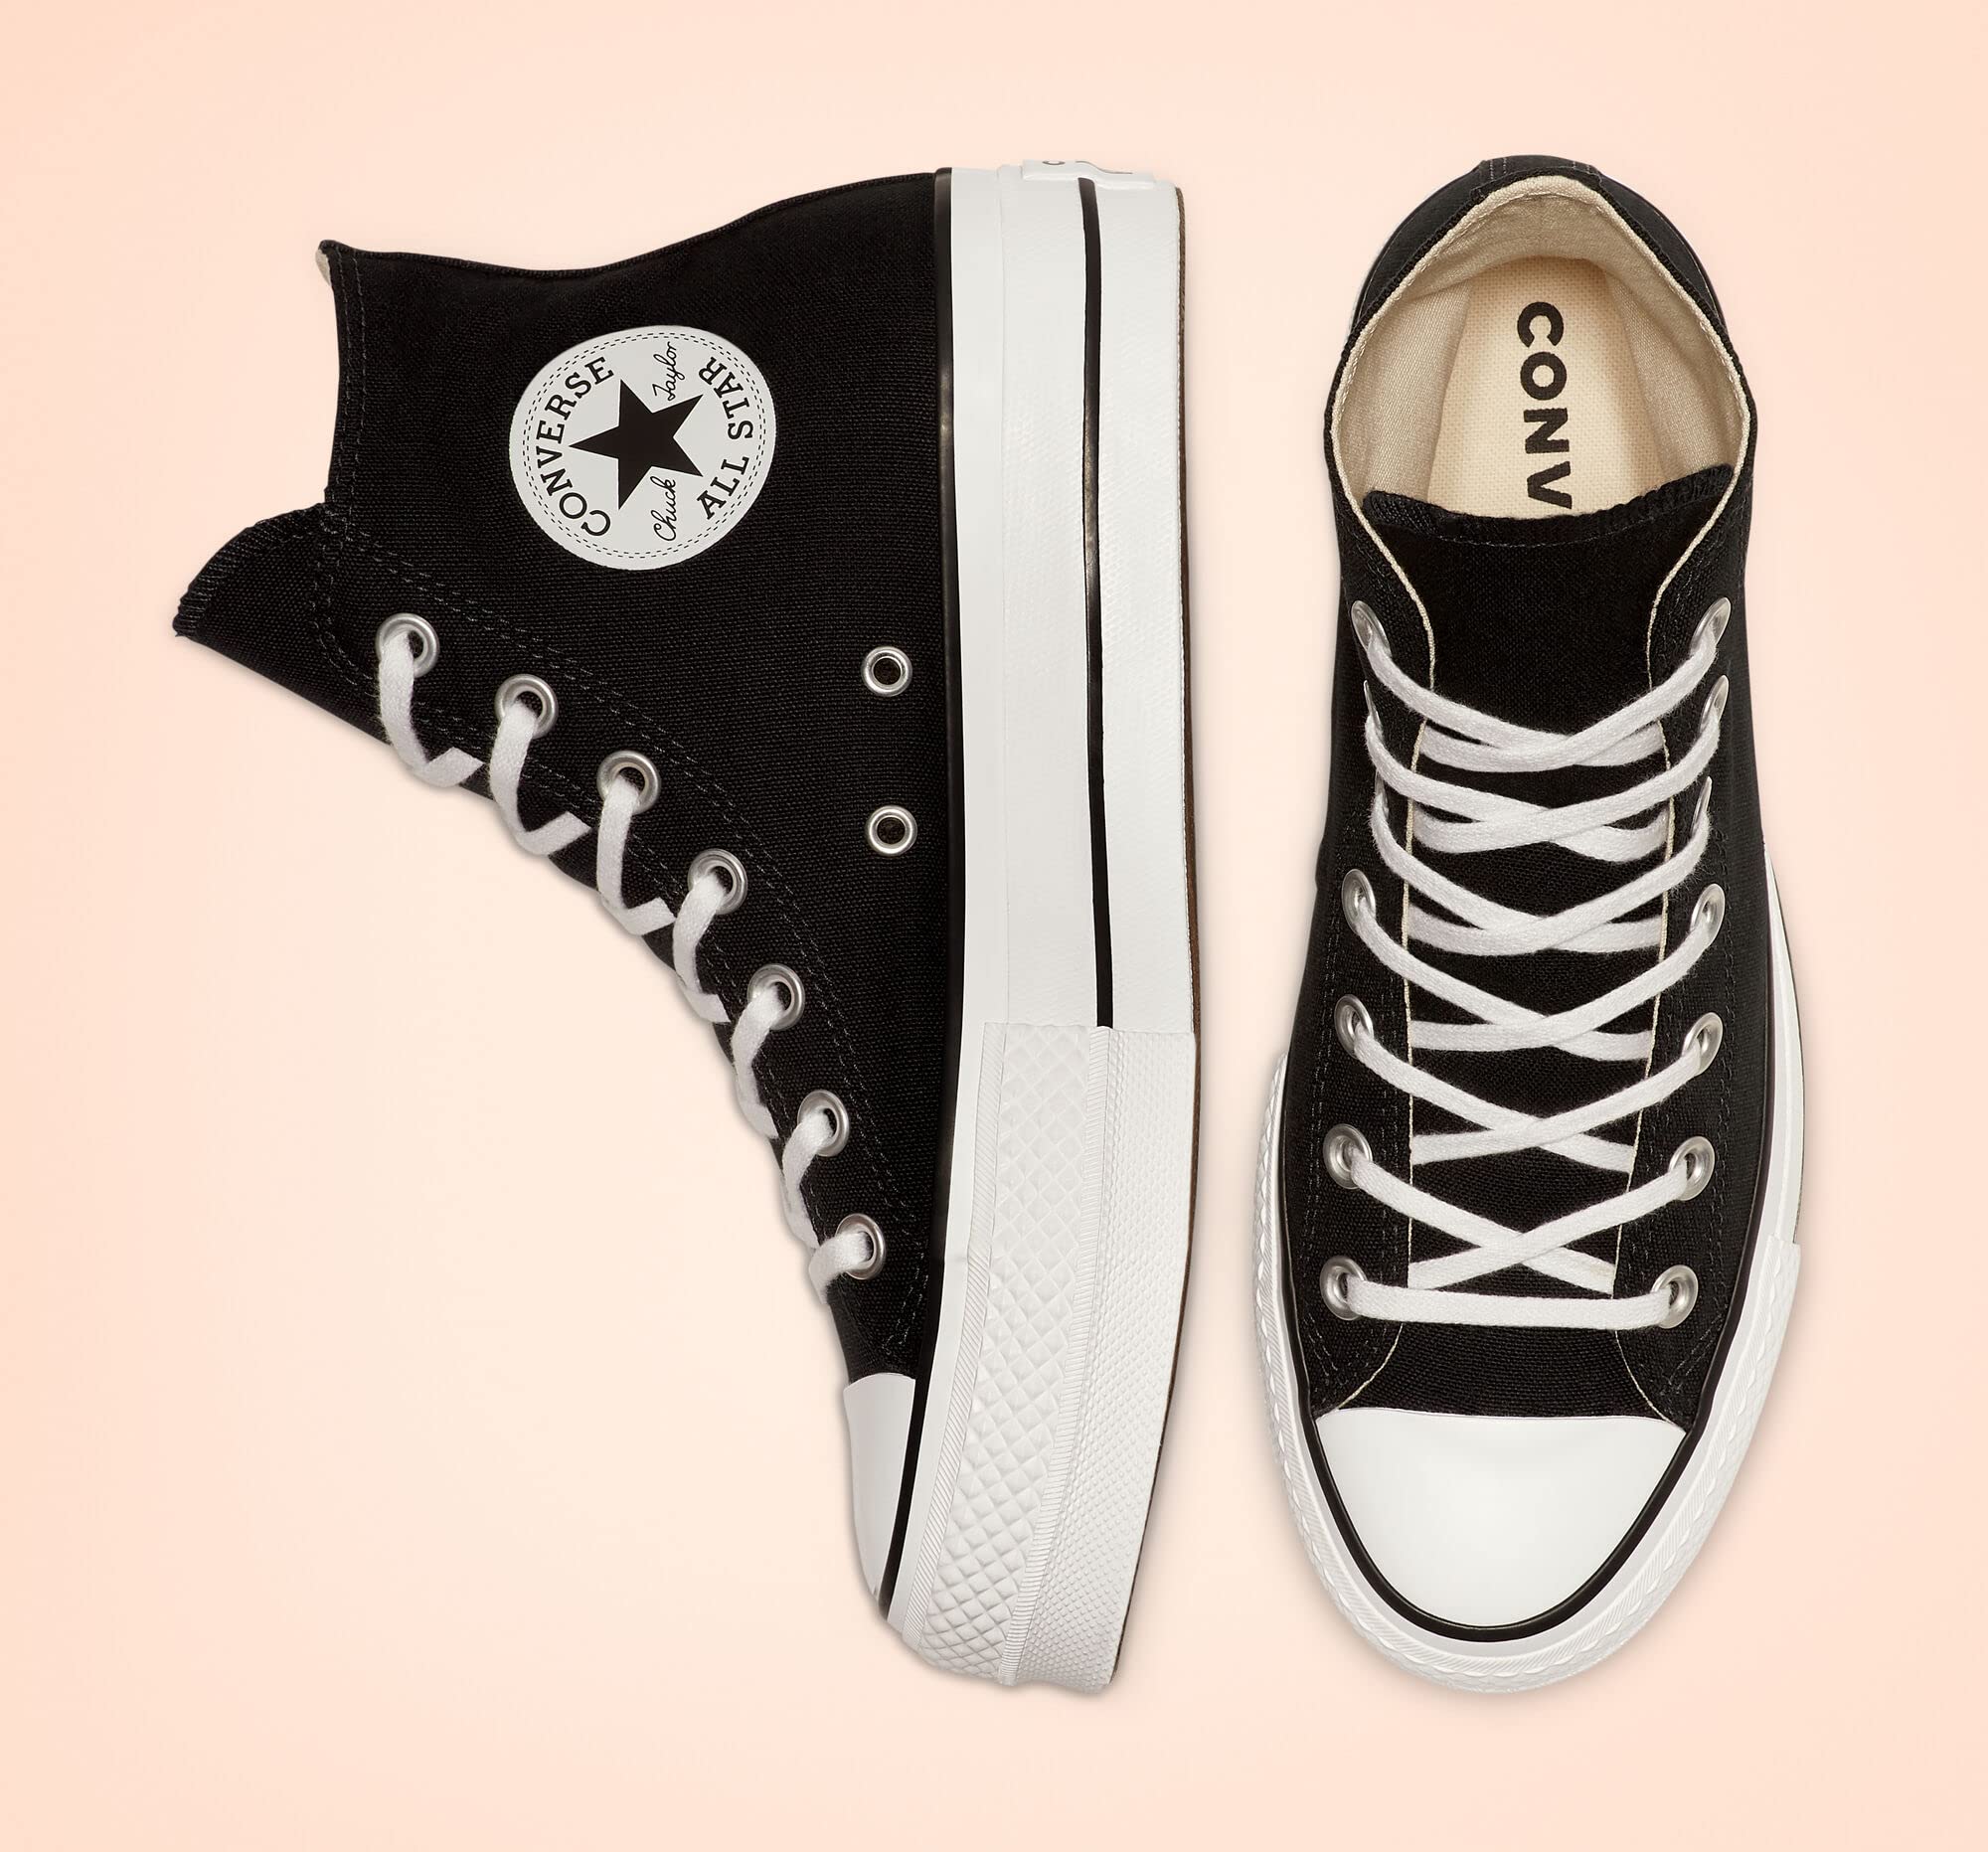 Converse Women's Chuck Taylor All Star Lift Platform Denim Fashion Sneakers, Black/White, 5.5